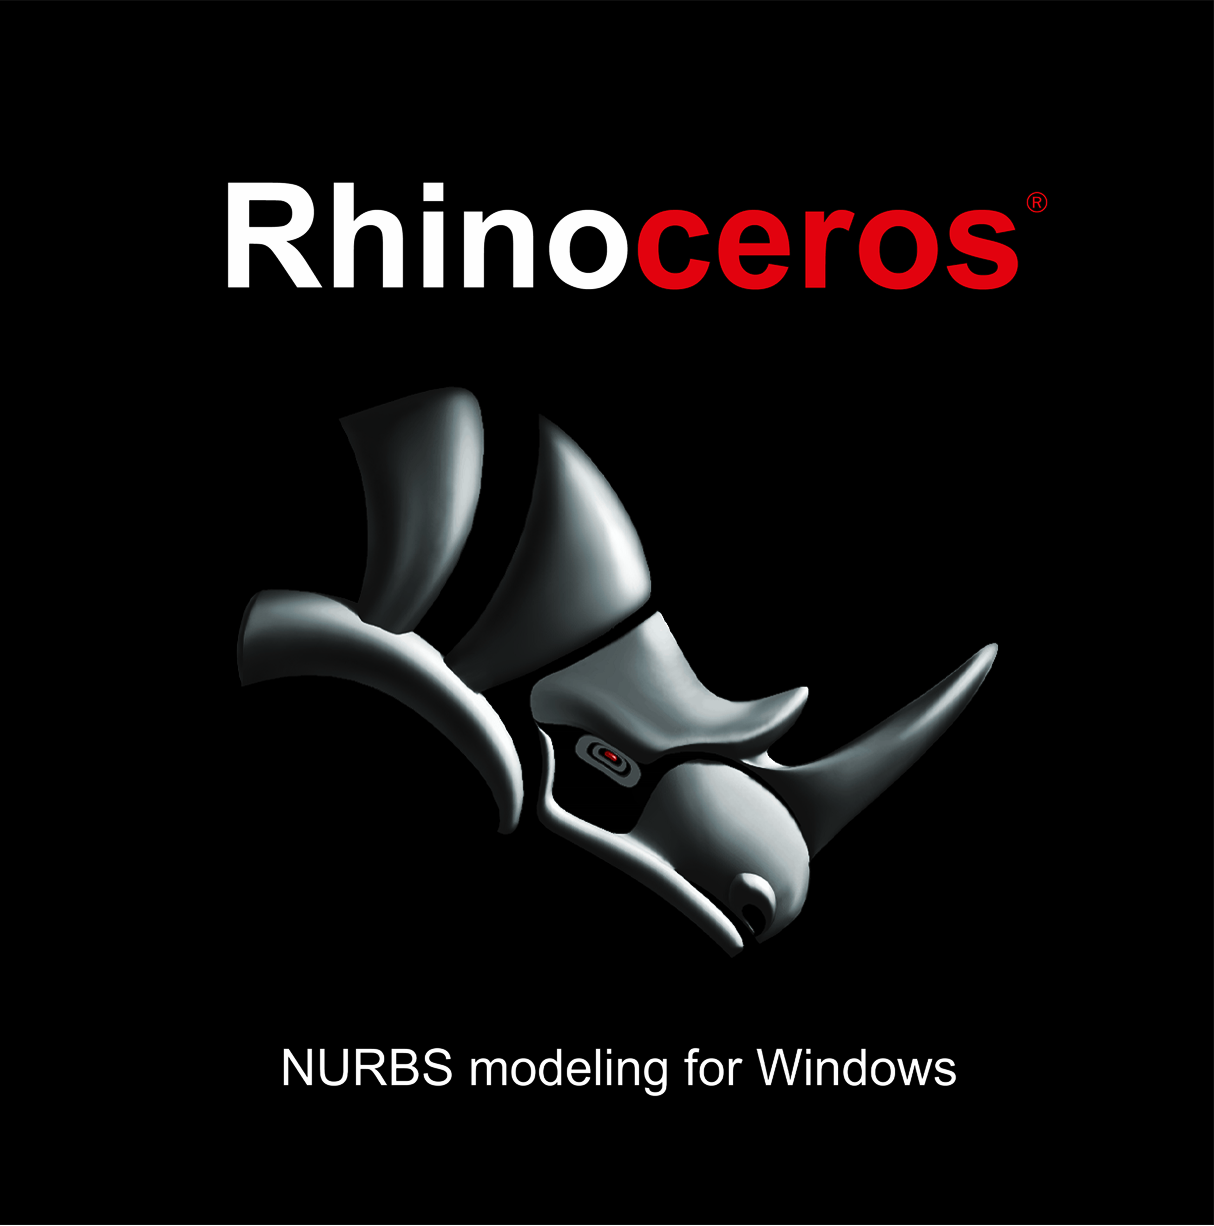 http://4.bp.blogspot.com/-zyPPJOkYaIY/T-1hko42vxI/AAAAAAAAABo/VCqoaKWNATA/s1600/Rhino_Logo.JPG